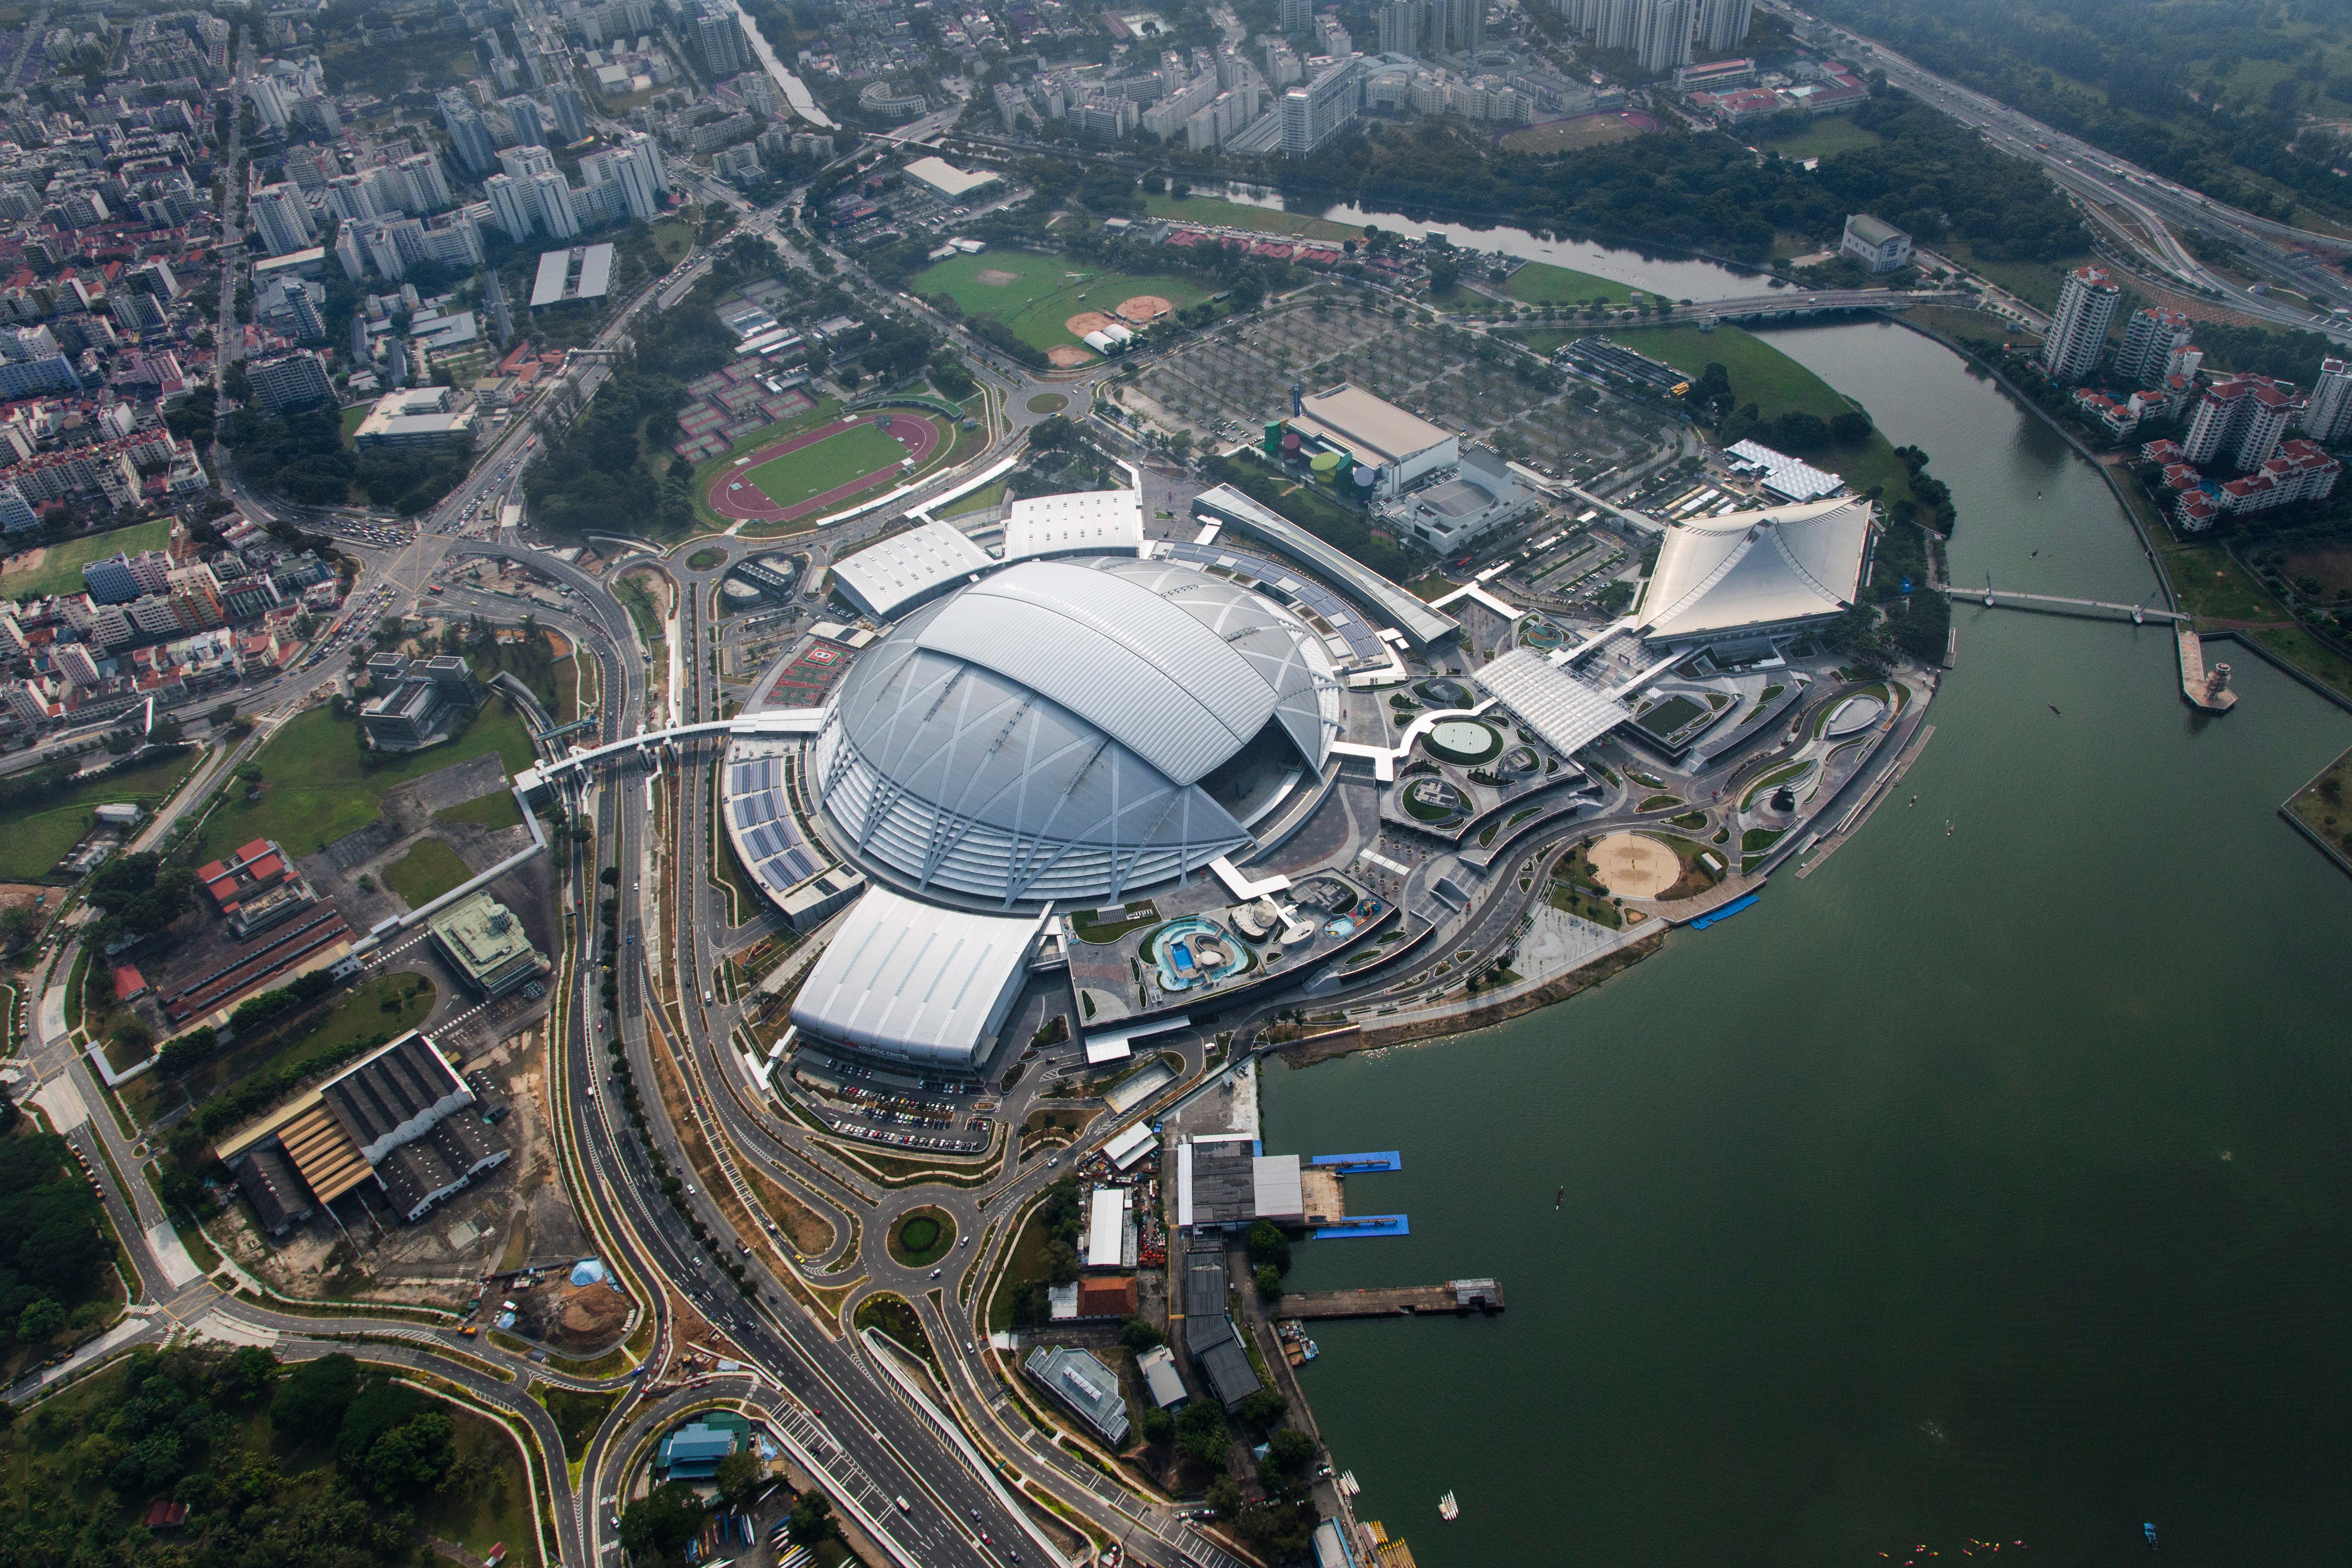 Singapore Sports Hub - Aerial View 1 (Singapore Tourism Board)